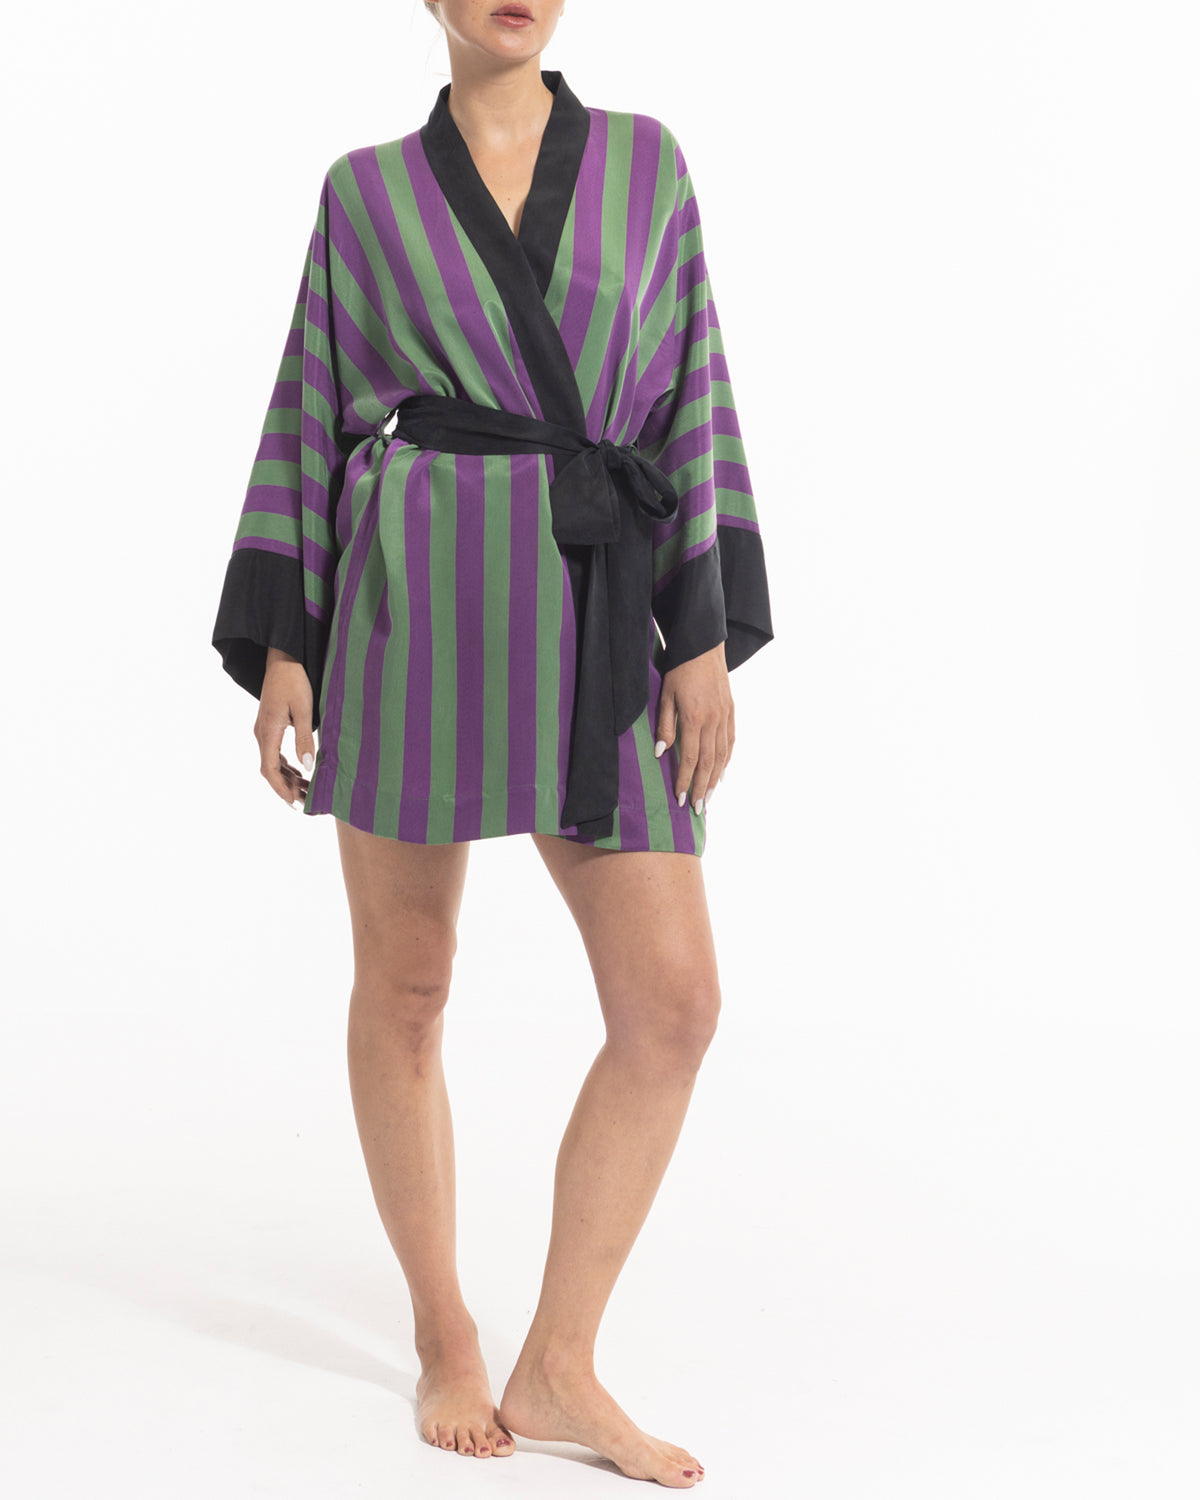 niLuu Women's Mini Kimono STRIPE One Size